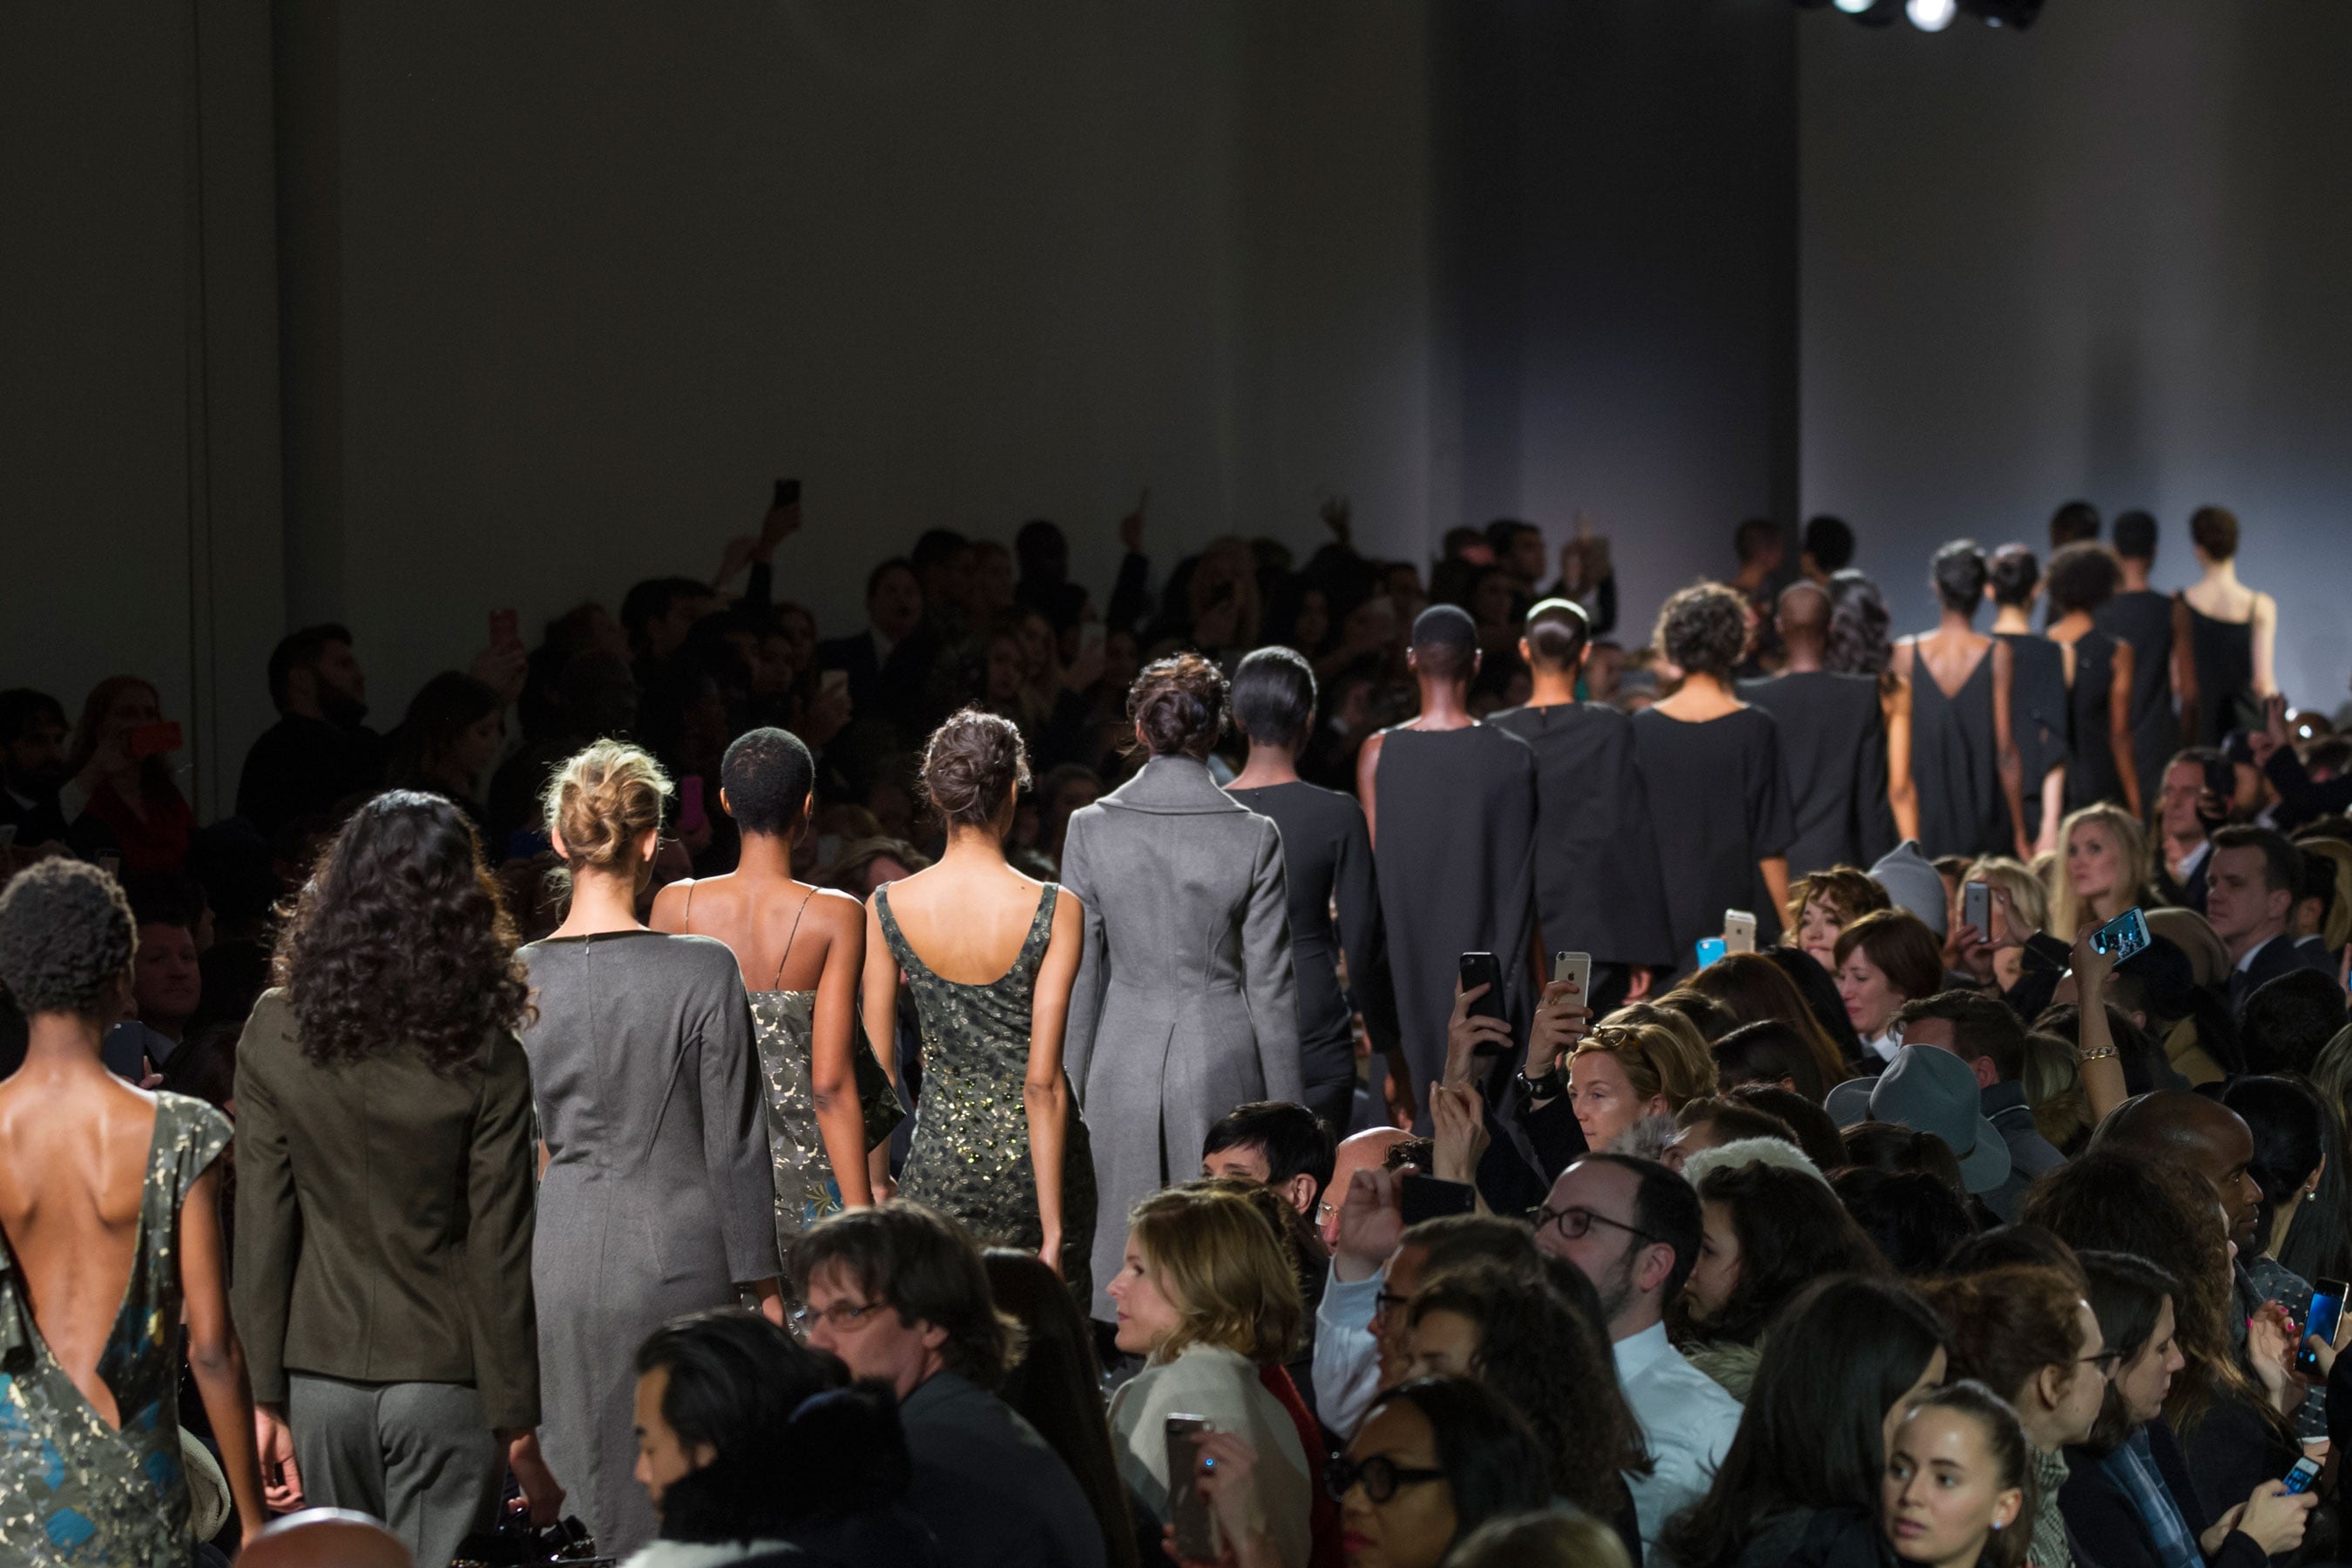 Fashion designer Zac Posen: 'Black models matter